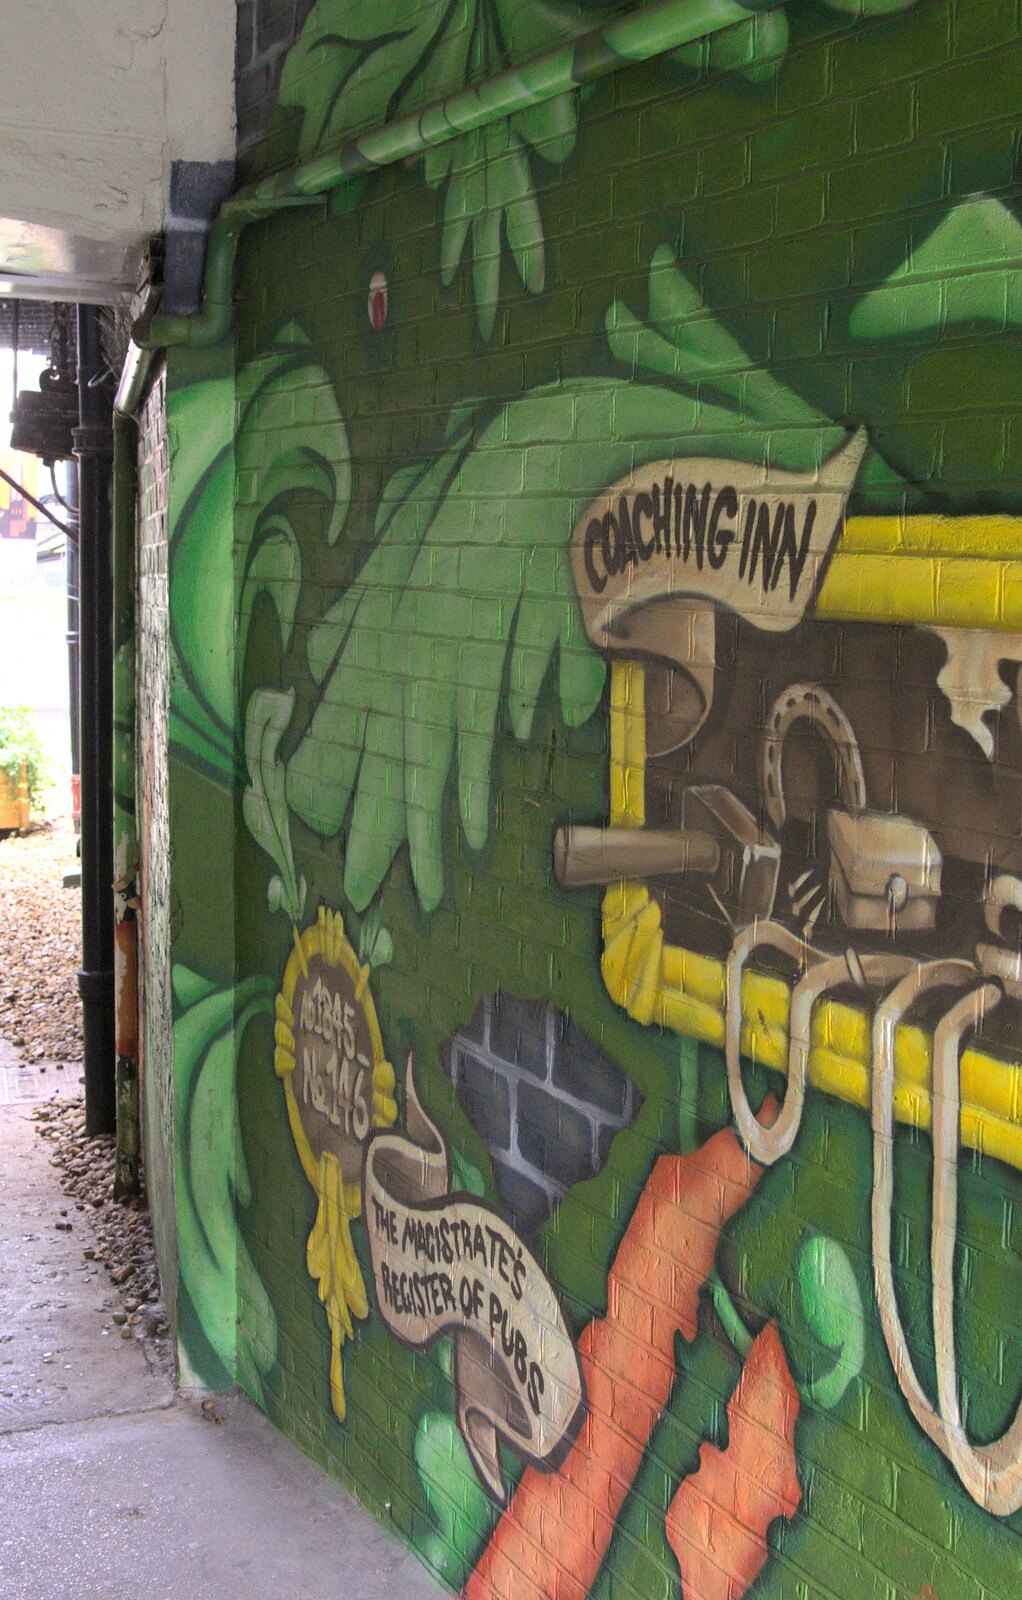 Wall art on Lamb's Inn Lane from Sis and Matt Visit, Suffolk and Norfolk - 31st May 2014